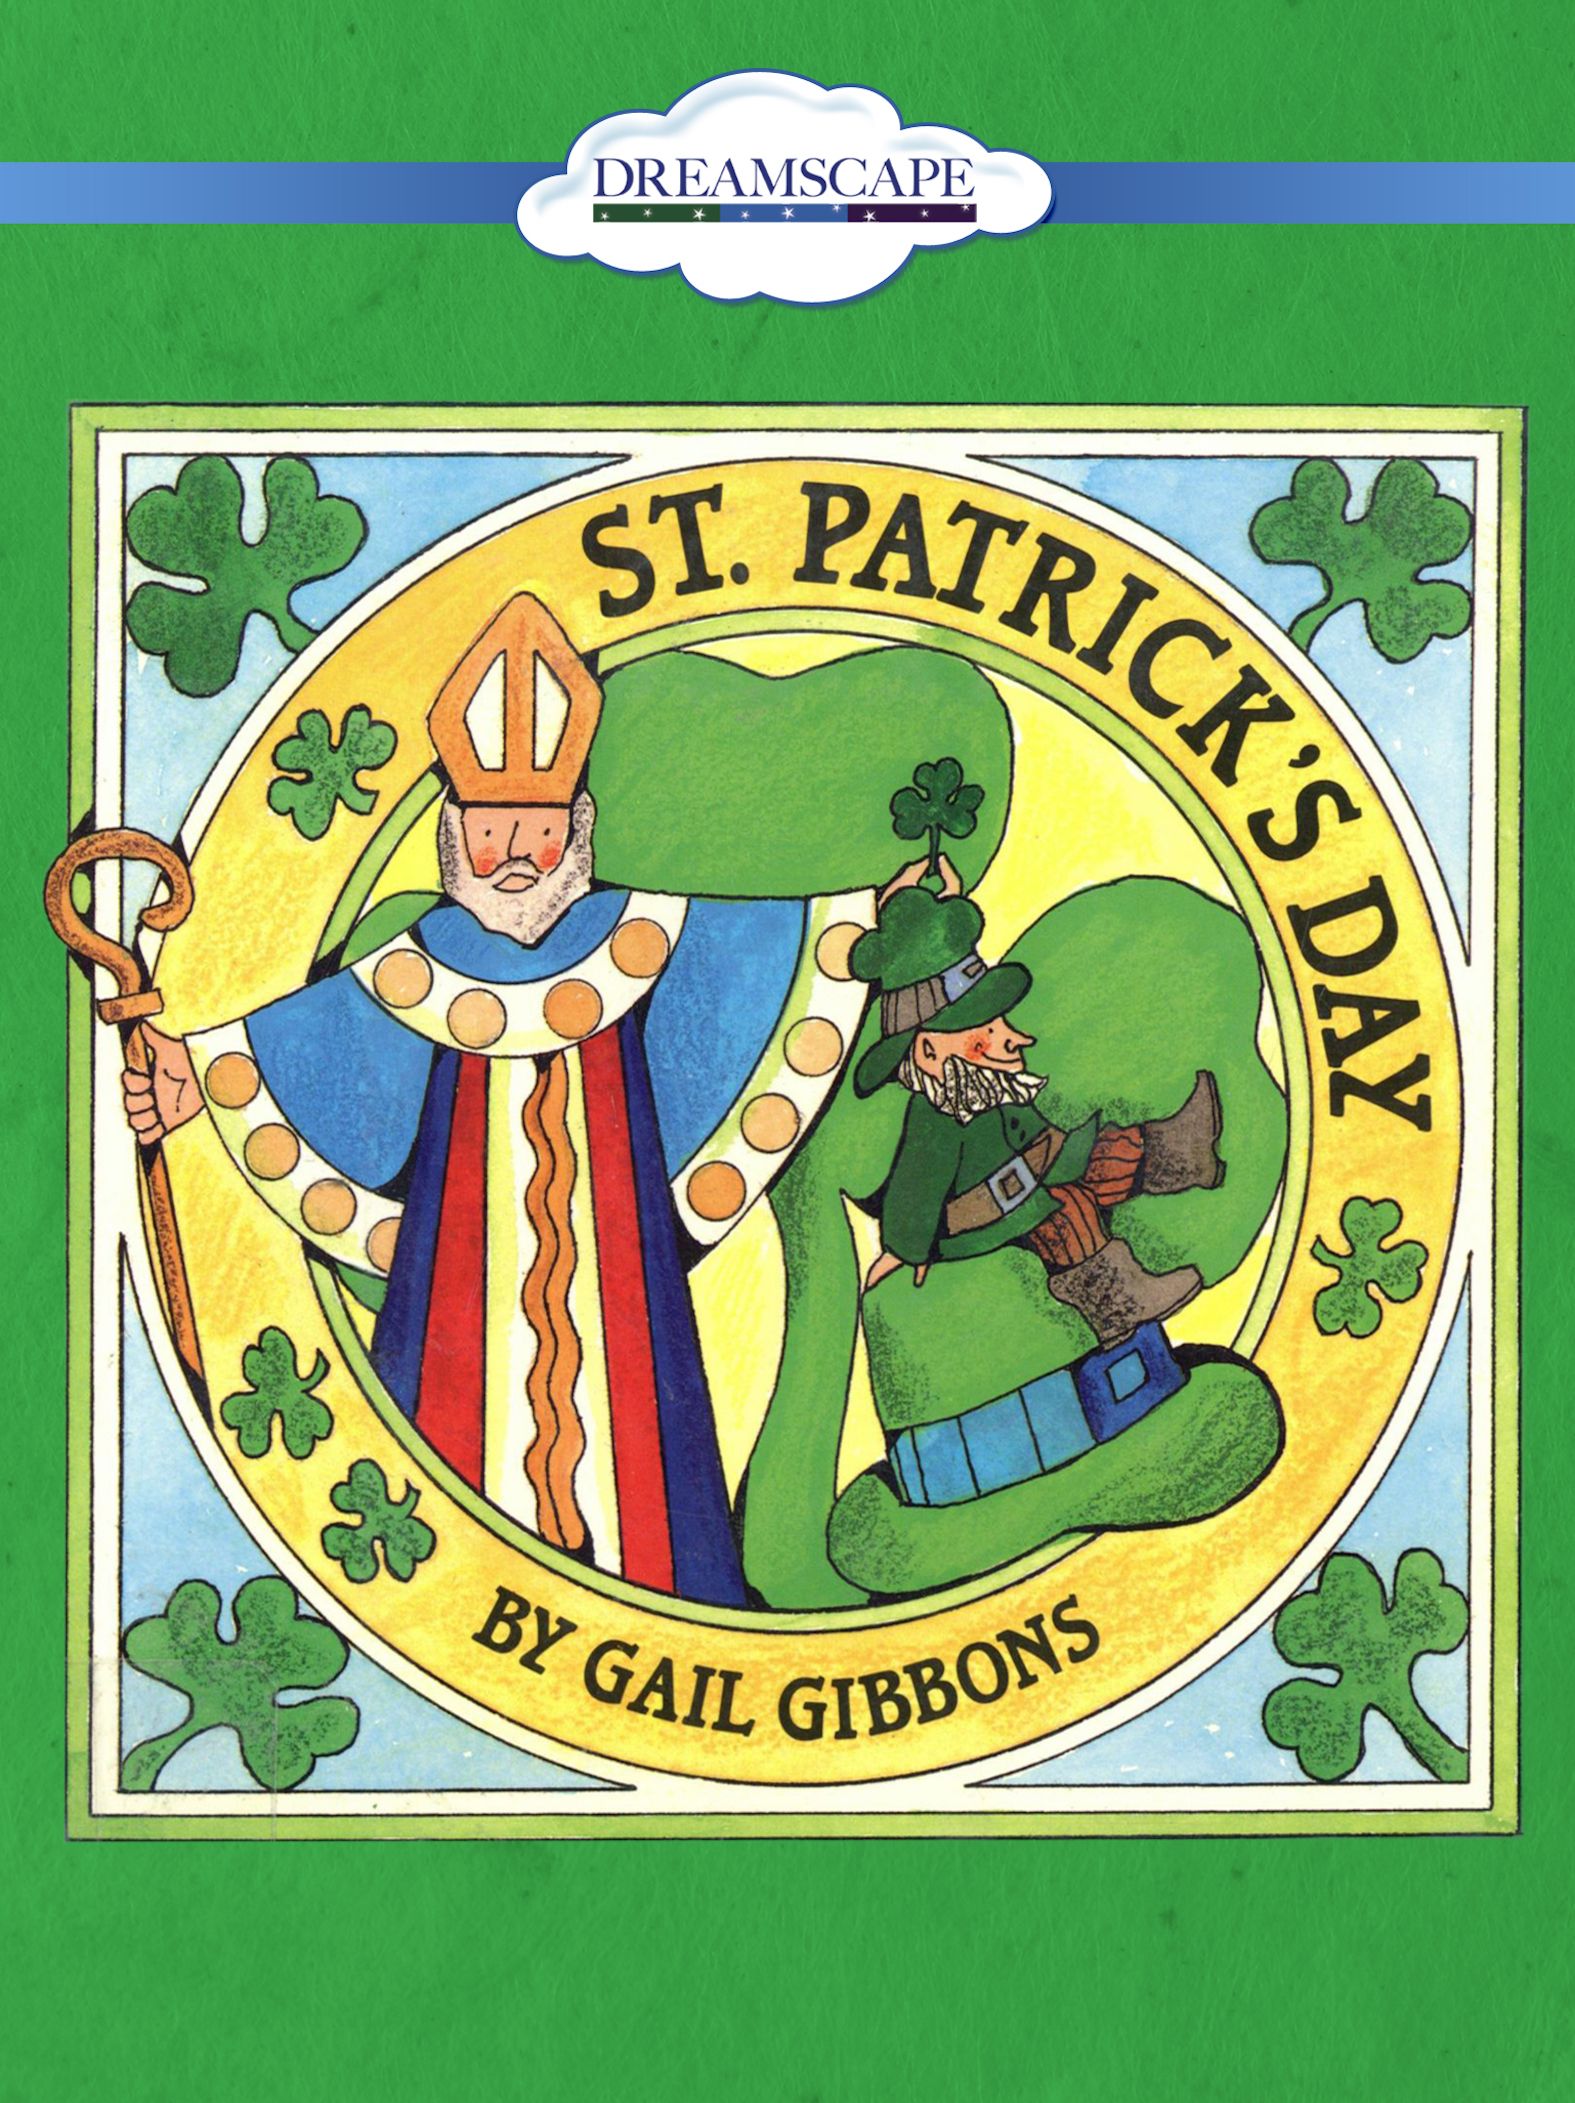 St. Patrick’s Day